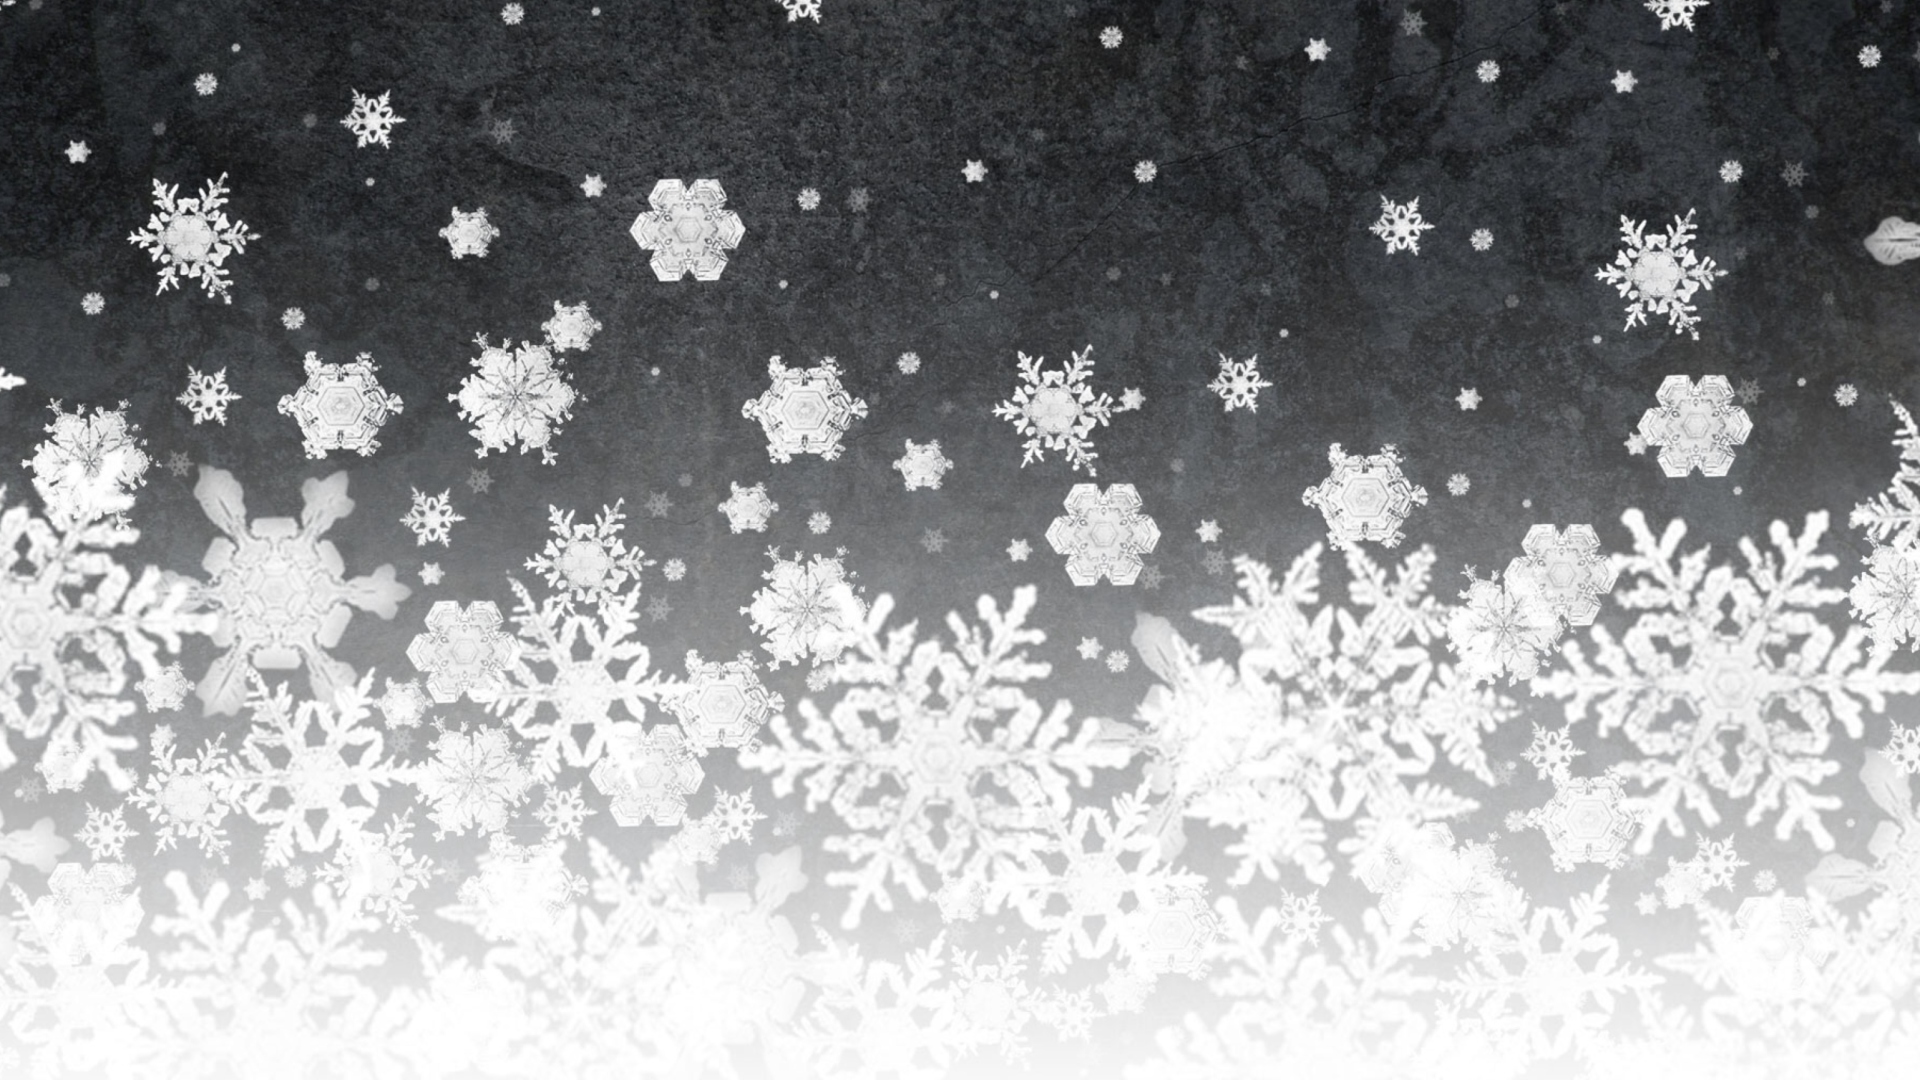 Snowflakes wallpaper 1920x1080